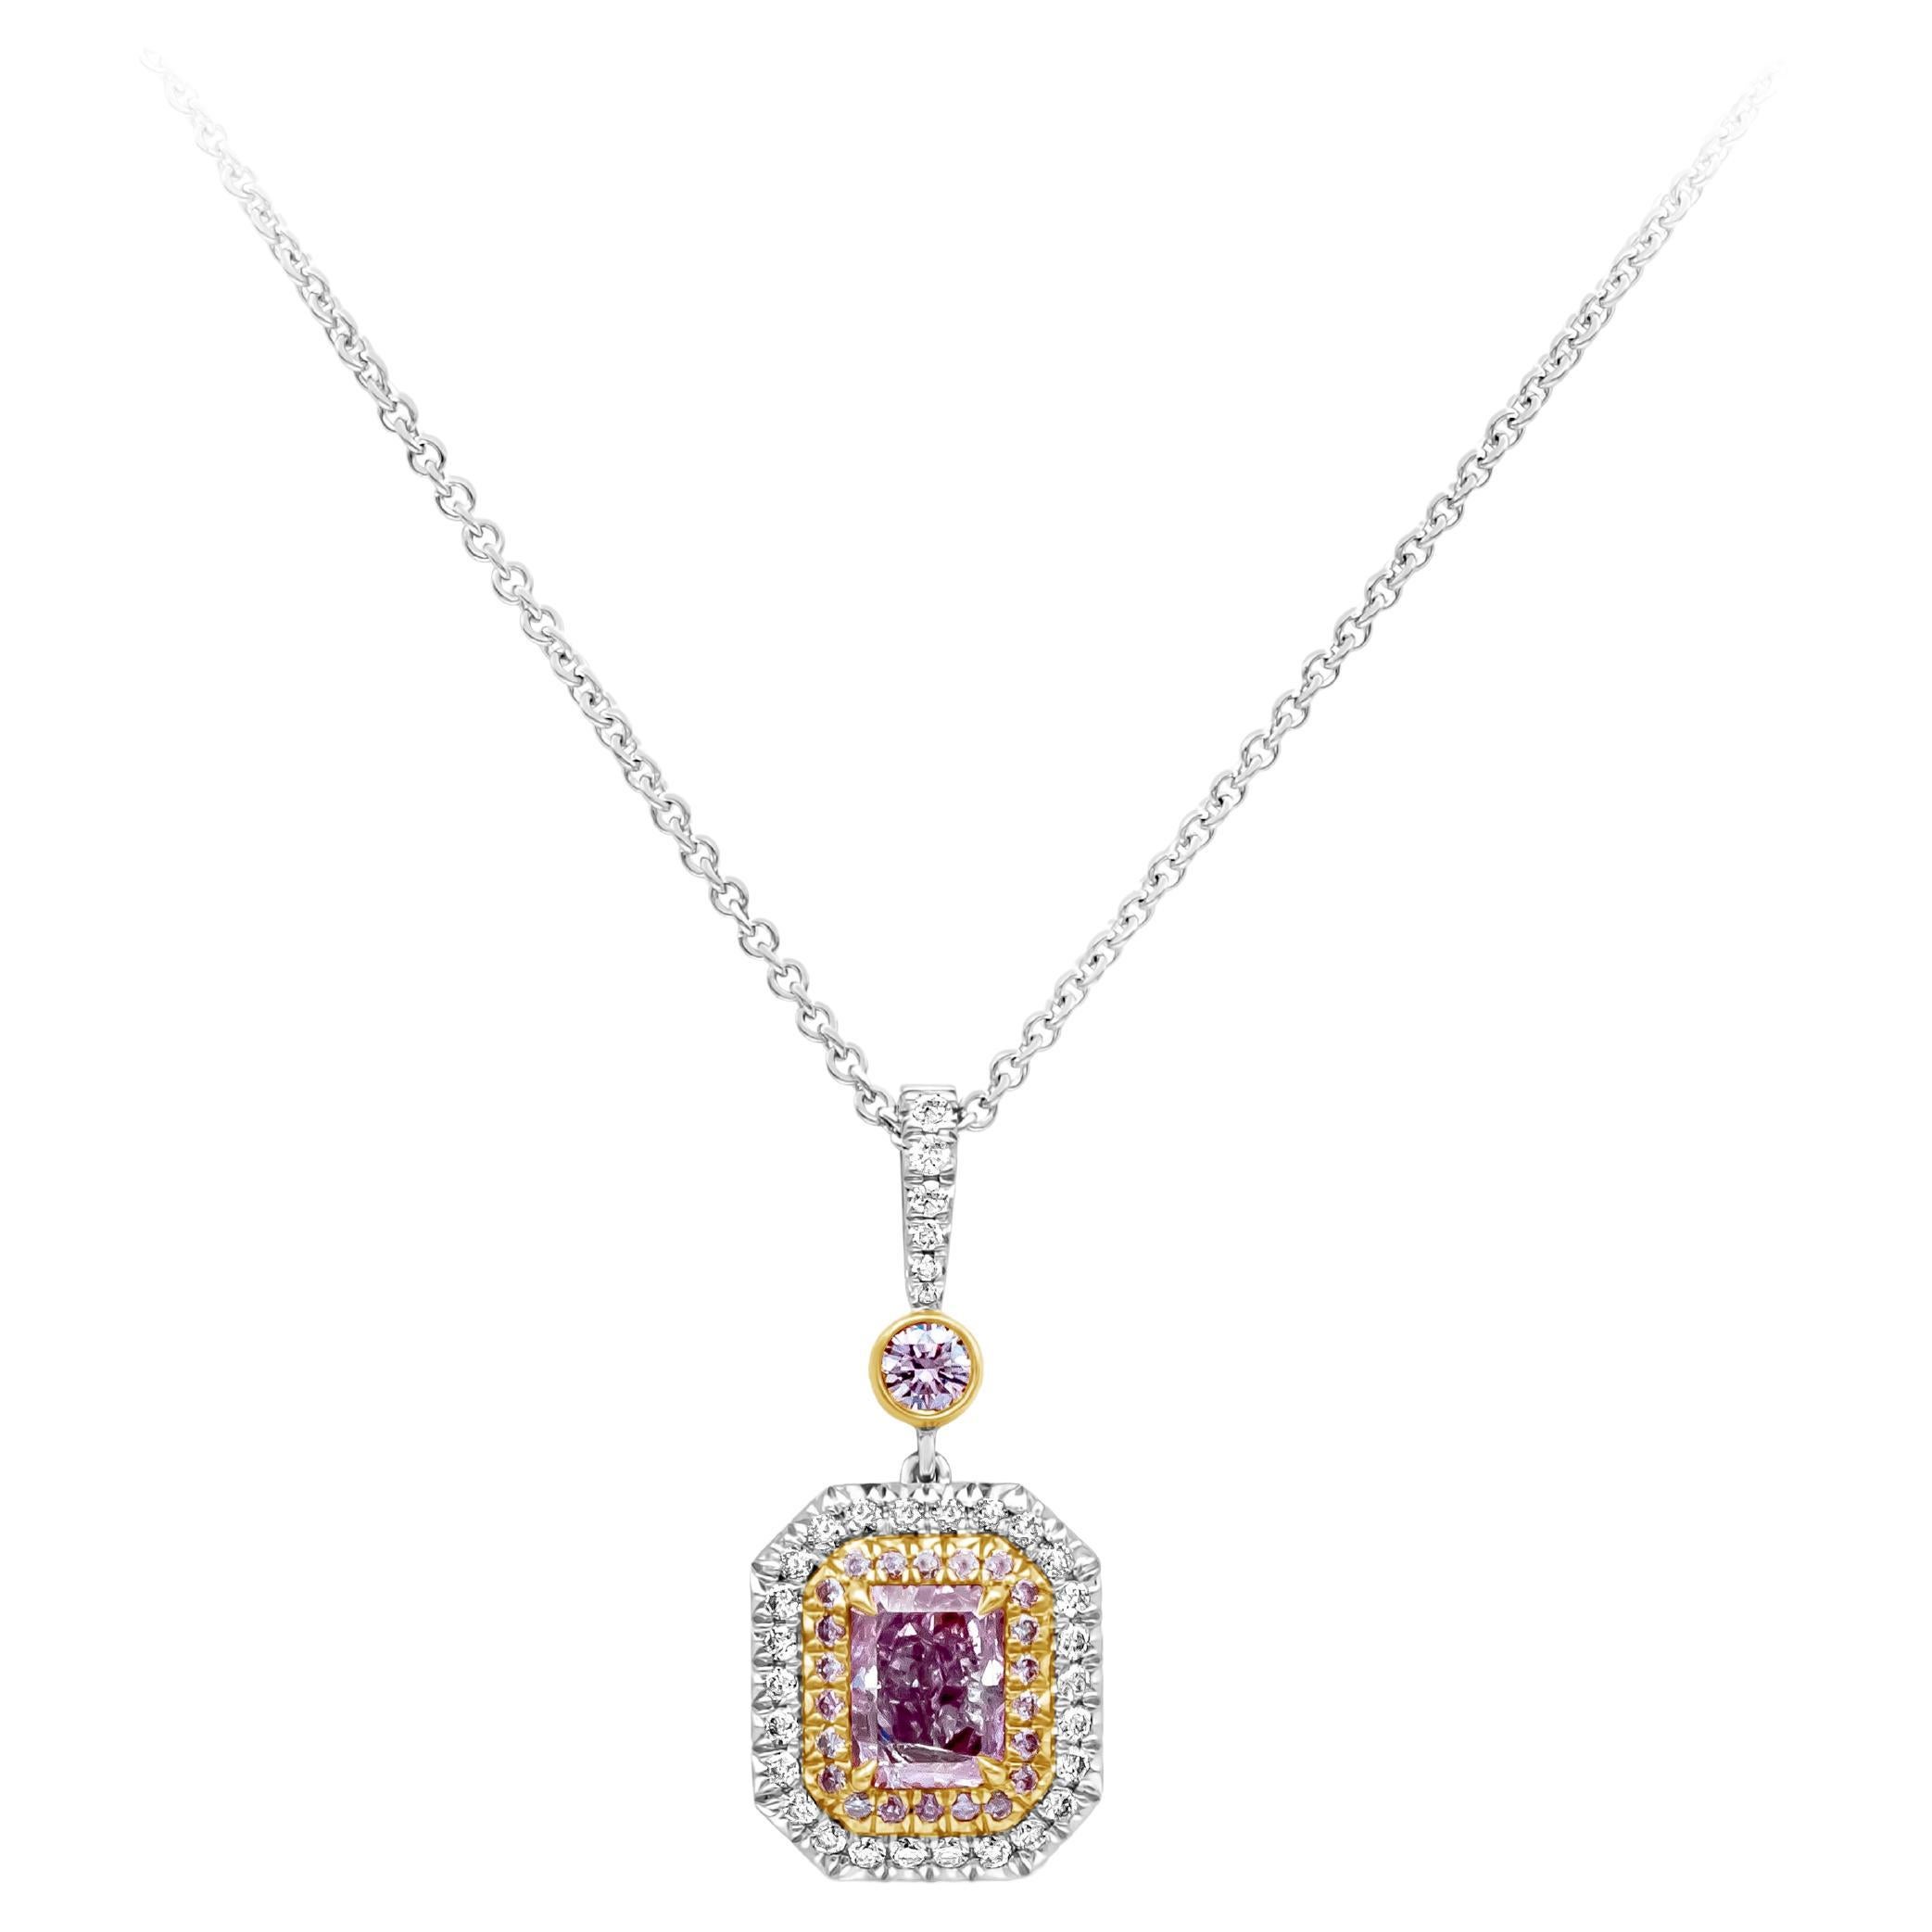 GIA Certified 1.01 Carat Radiant Cut Fancy Color Pink Diamond Pendant Necklace